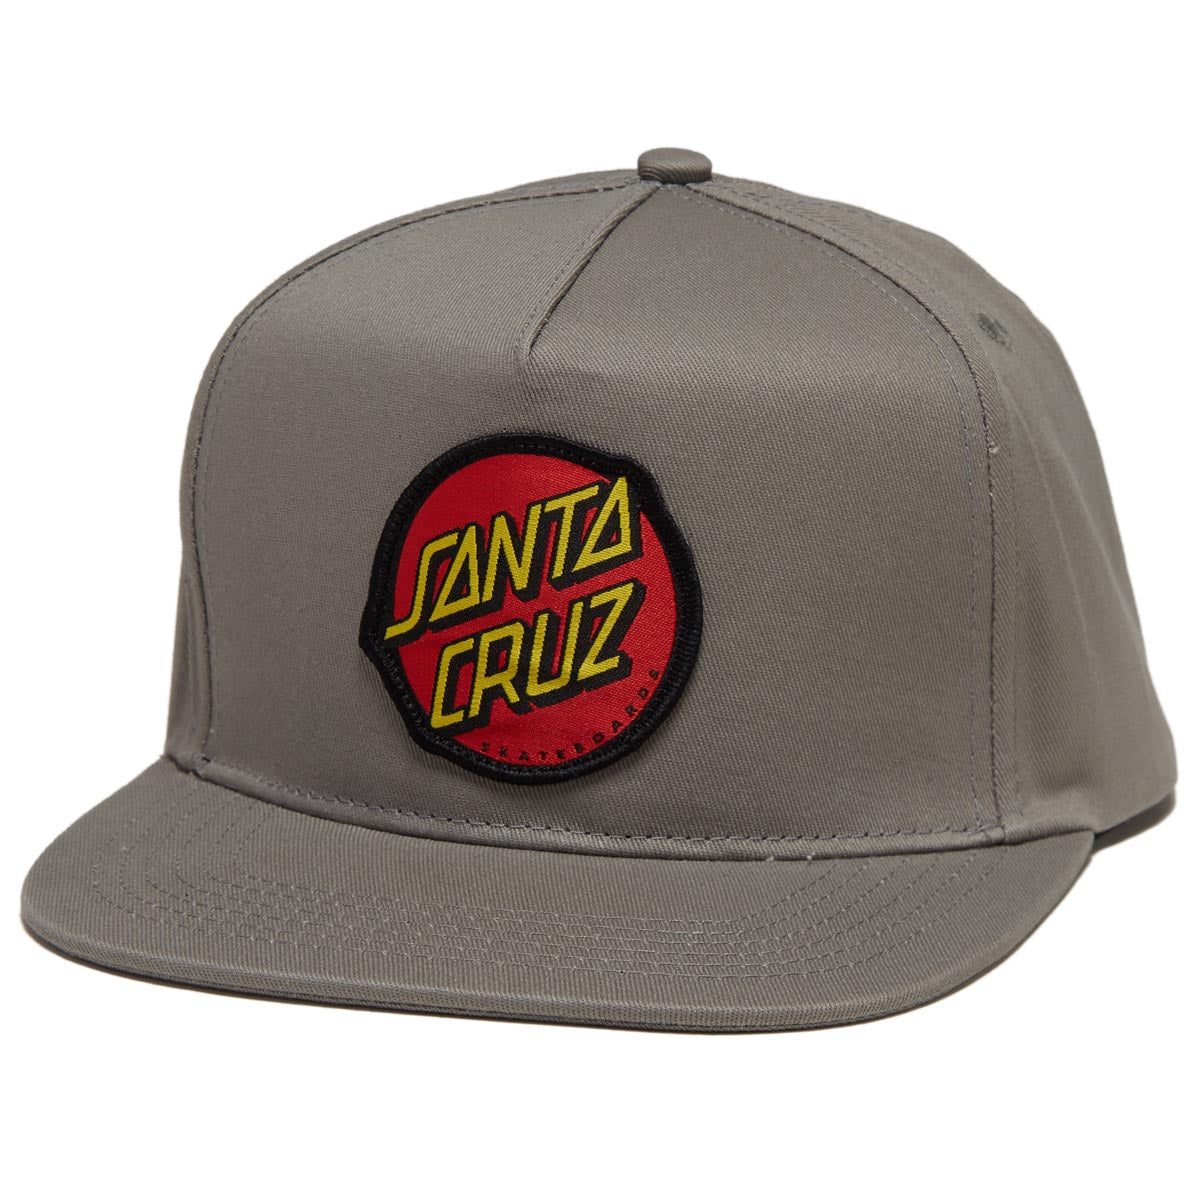 Santa Cruz Classic Snapback Mid Profile Hat - Grey image 1